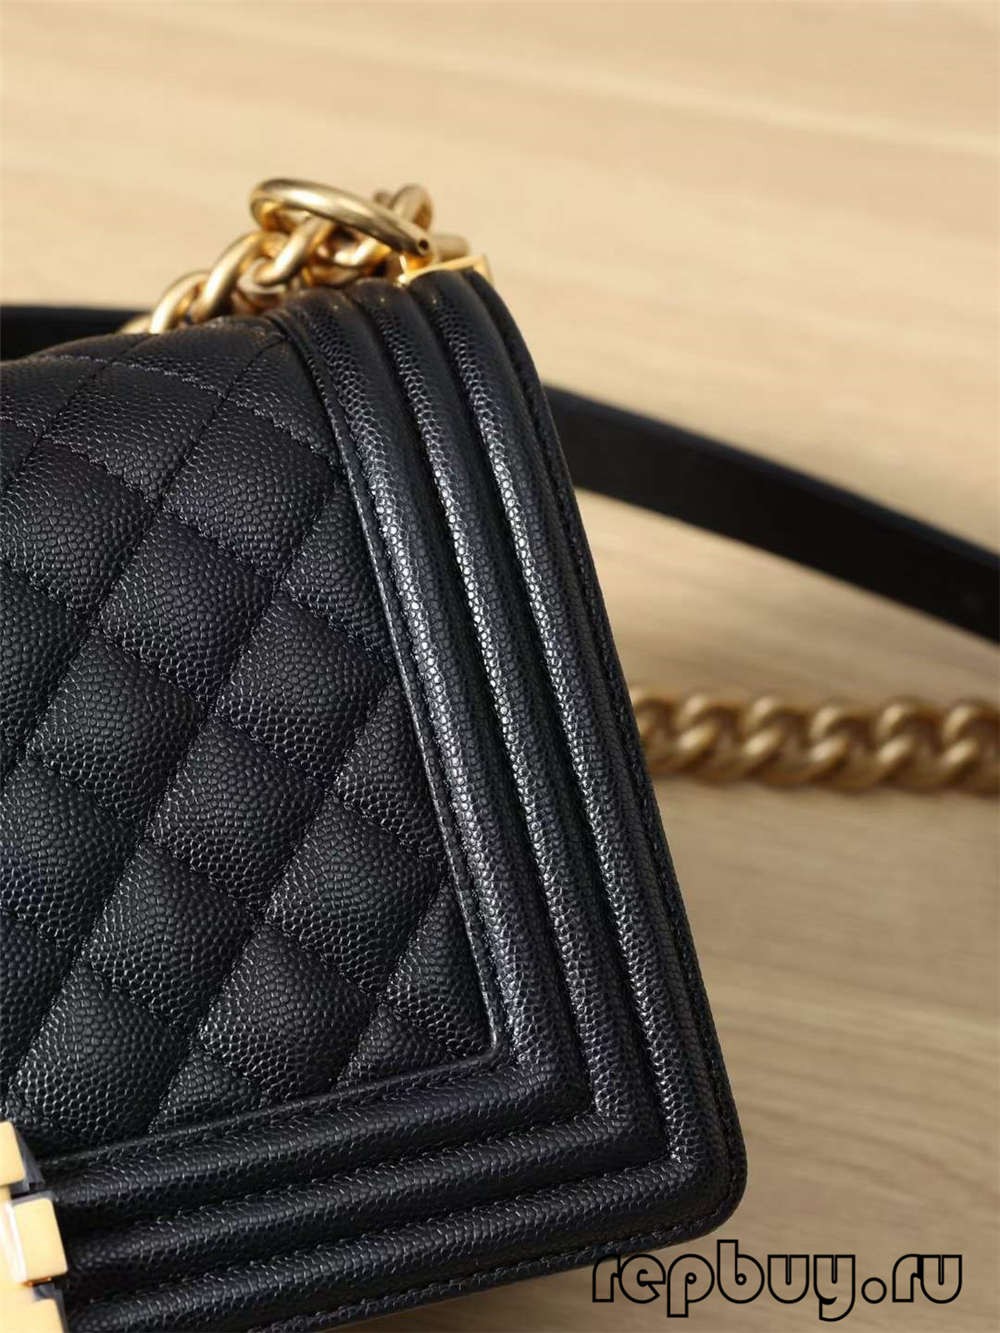 Chanel Le boy top replica handbags medium gold buckle leather and hardware details (2022 Updated)-Best Quality Fake designer Bag Review, Replica designer bag ru